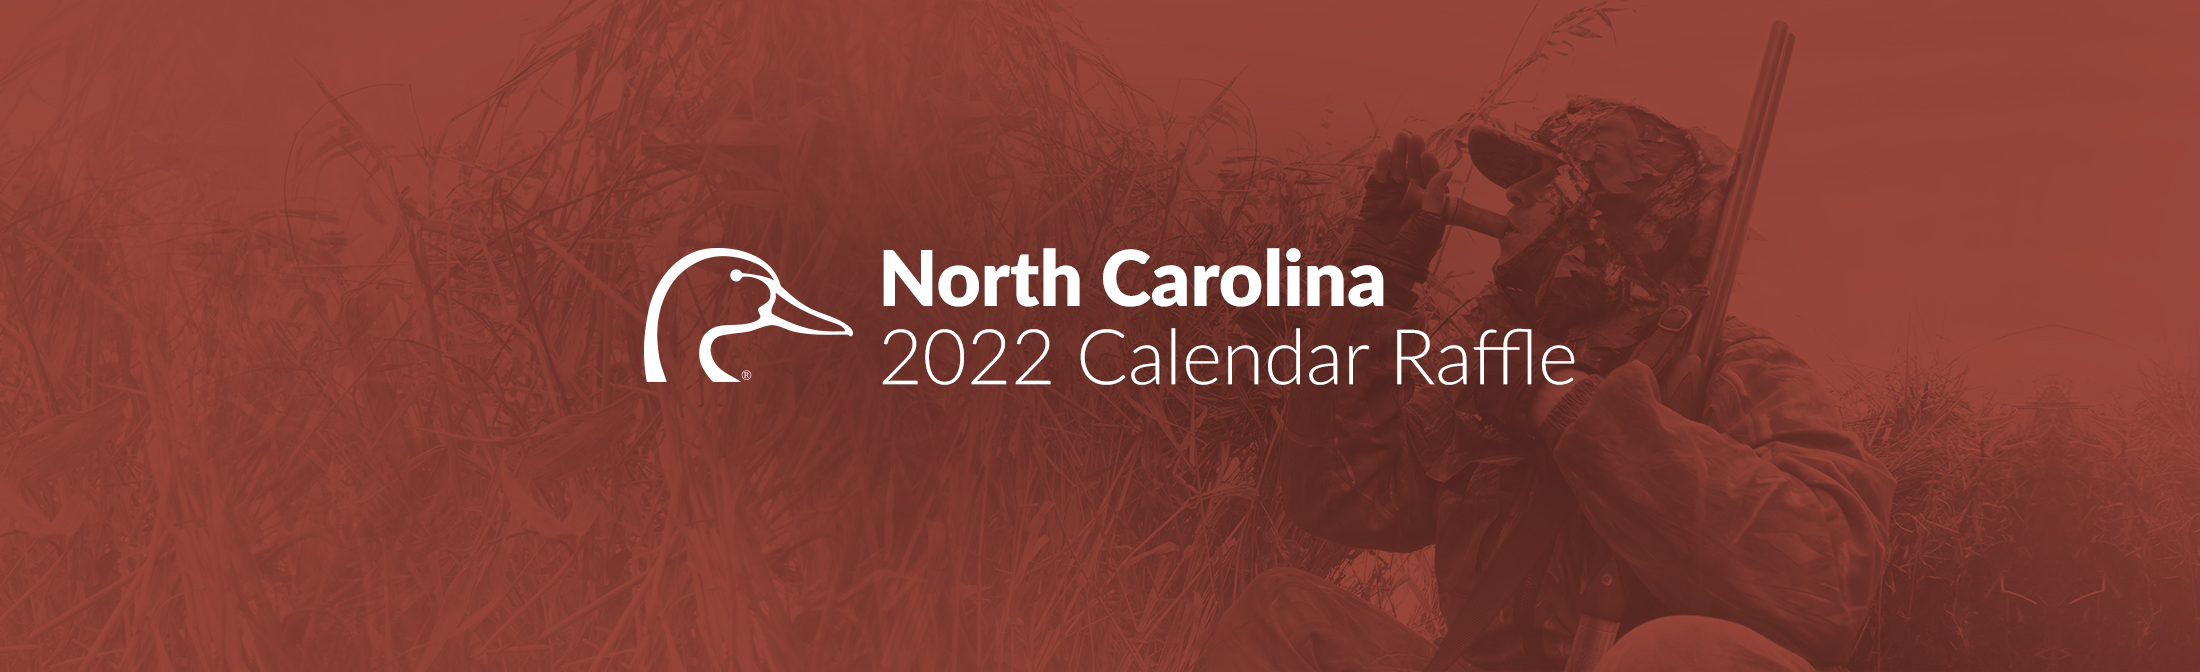 03/09/2022 NCDU Calendar Winner NC Ducks Unlimited